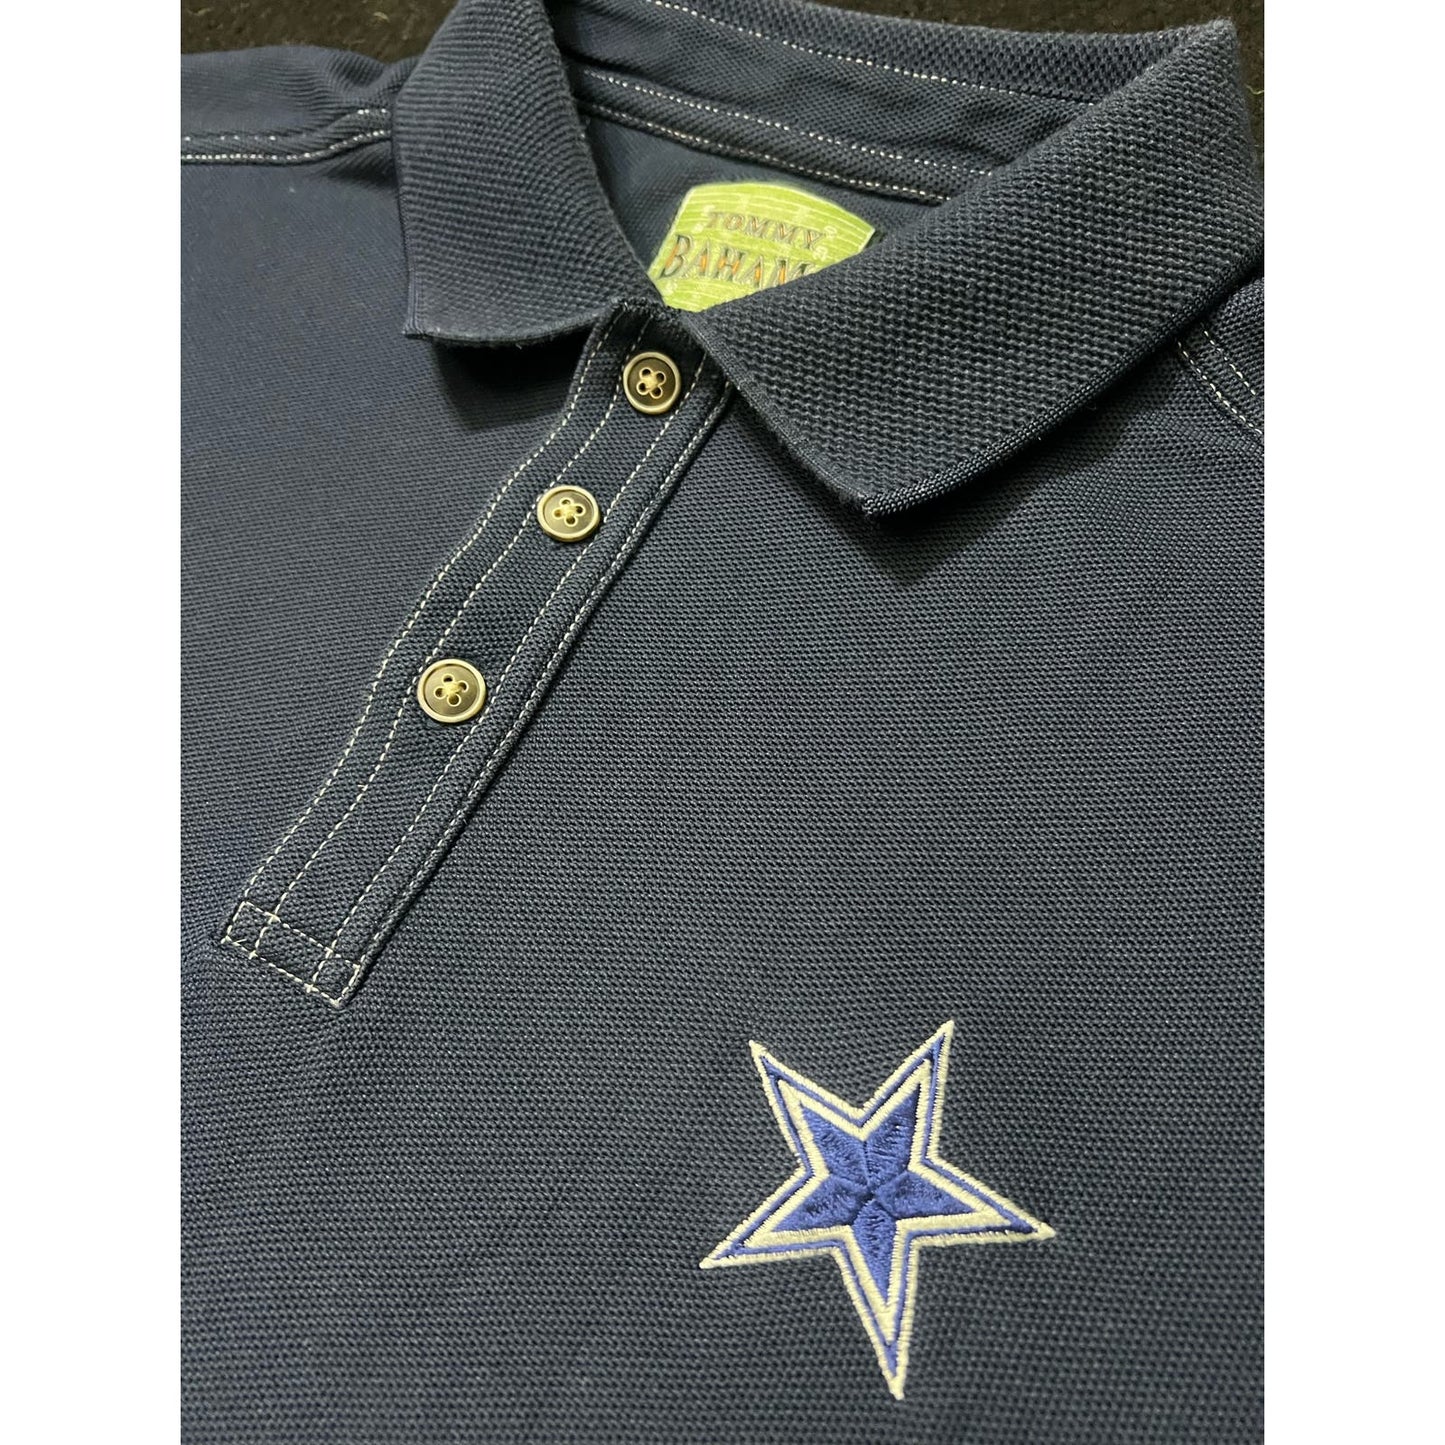 Tommy Bahama Dallas Cowboys Polo shirt